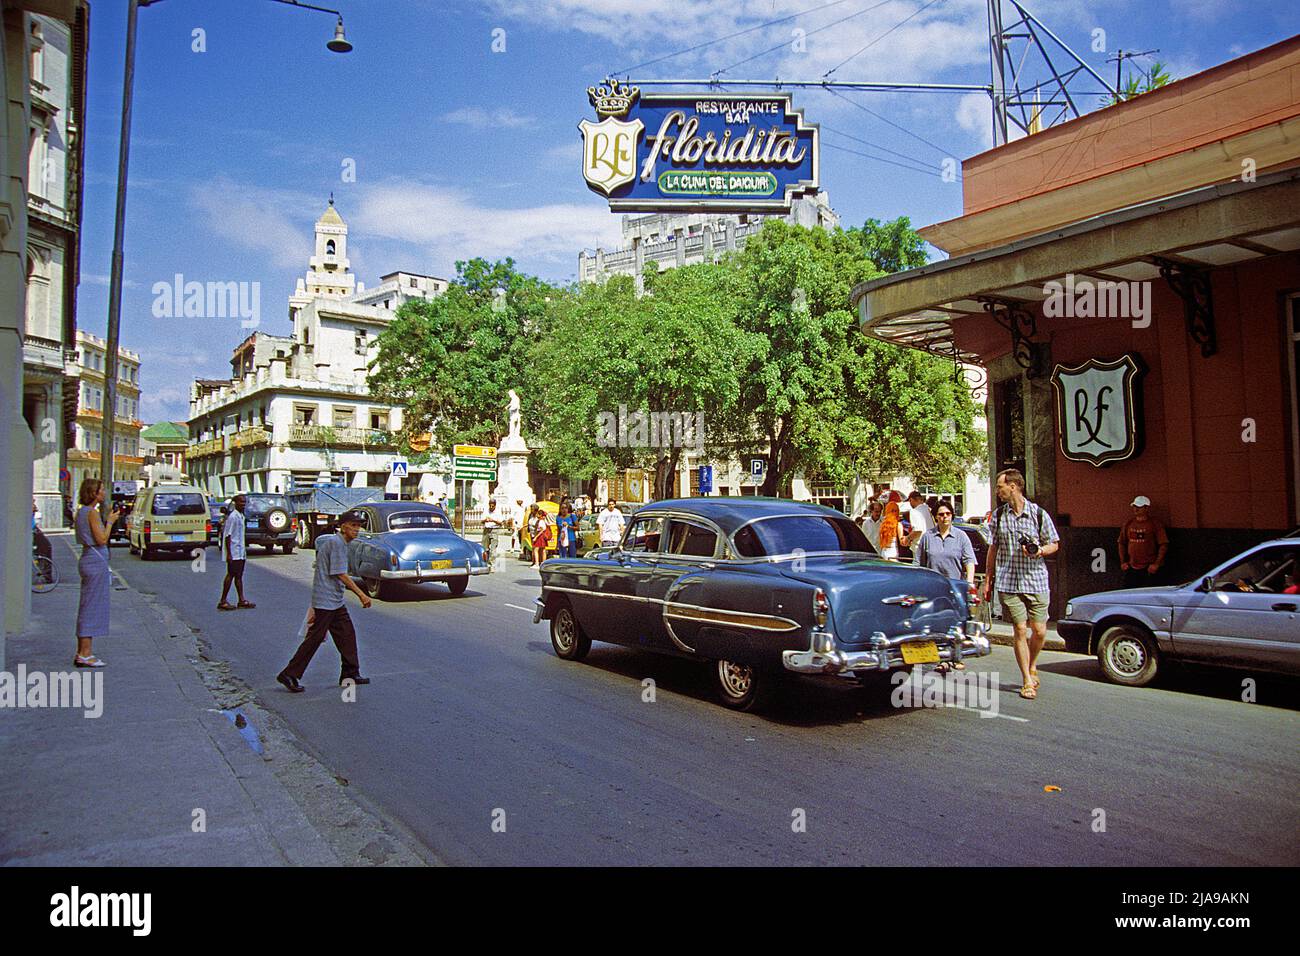 El Floridita, former favorite Bar of  Ernest Hemingway, today tourist attraction, El Floridita, Havana, Cuba, Caribbean Stock Photo